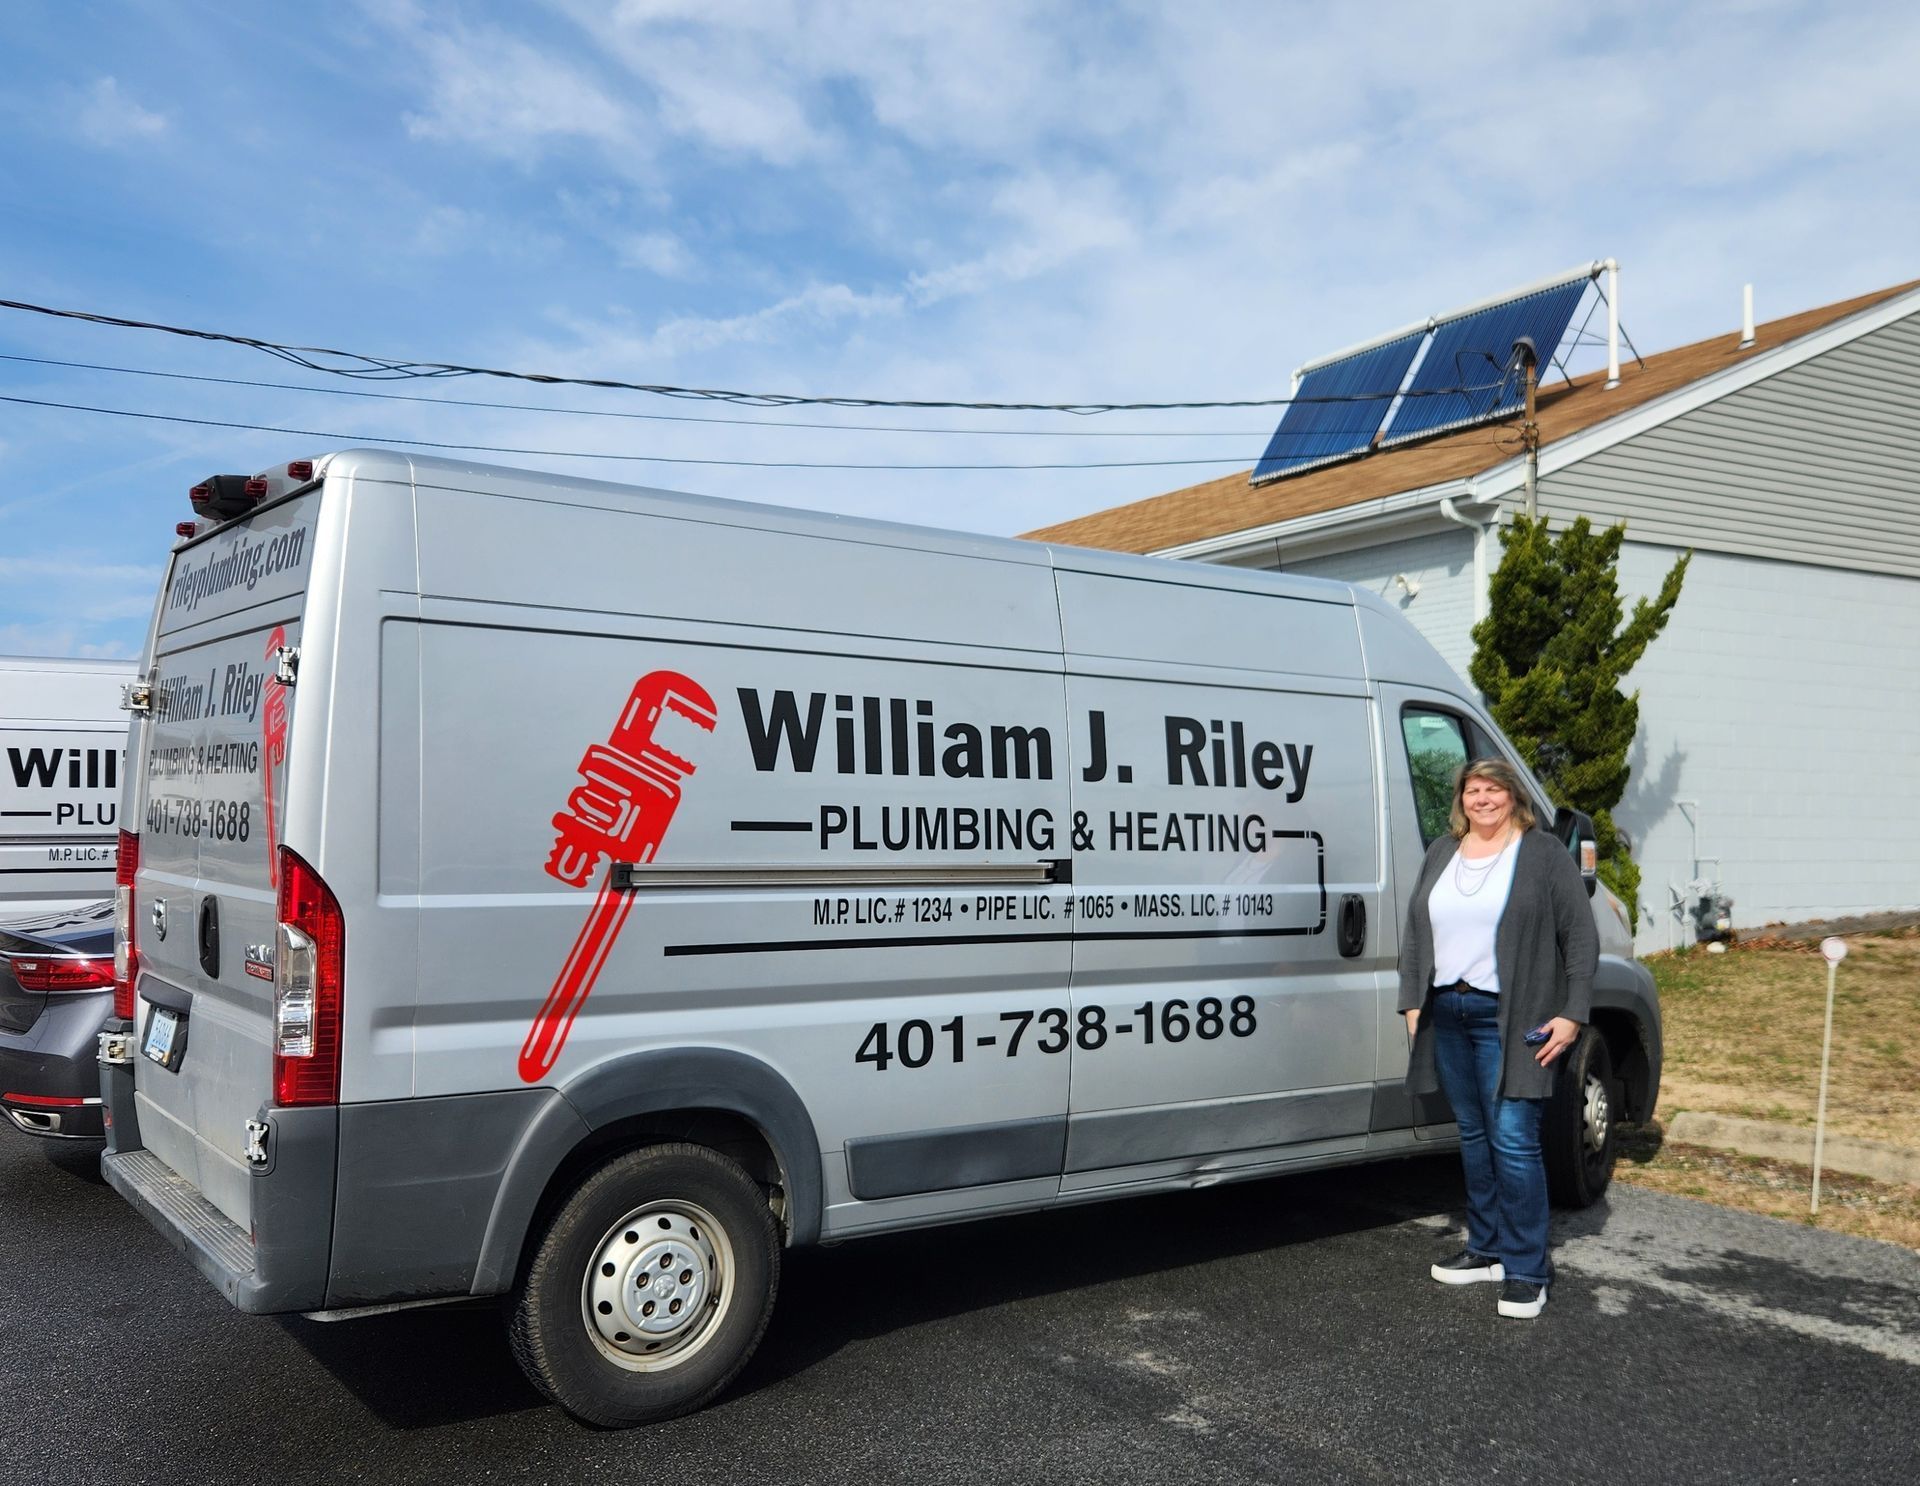 Liz the owner is standing in front of a william j. riley plumbing and heating van